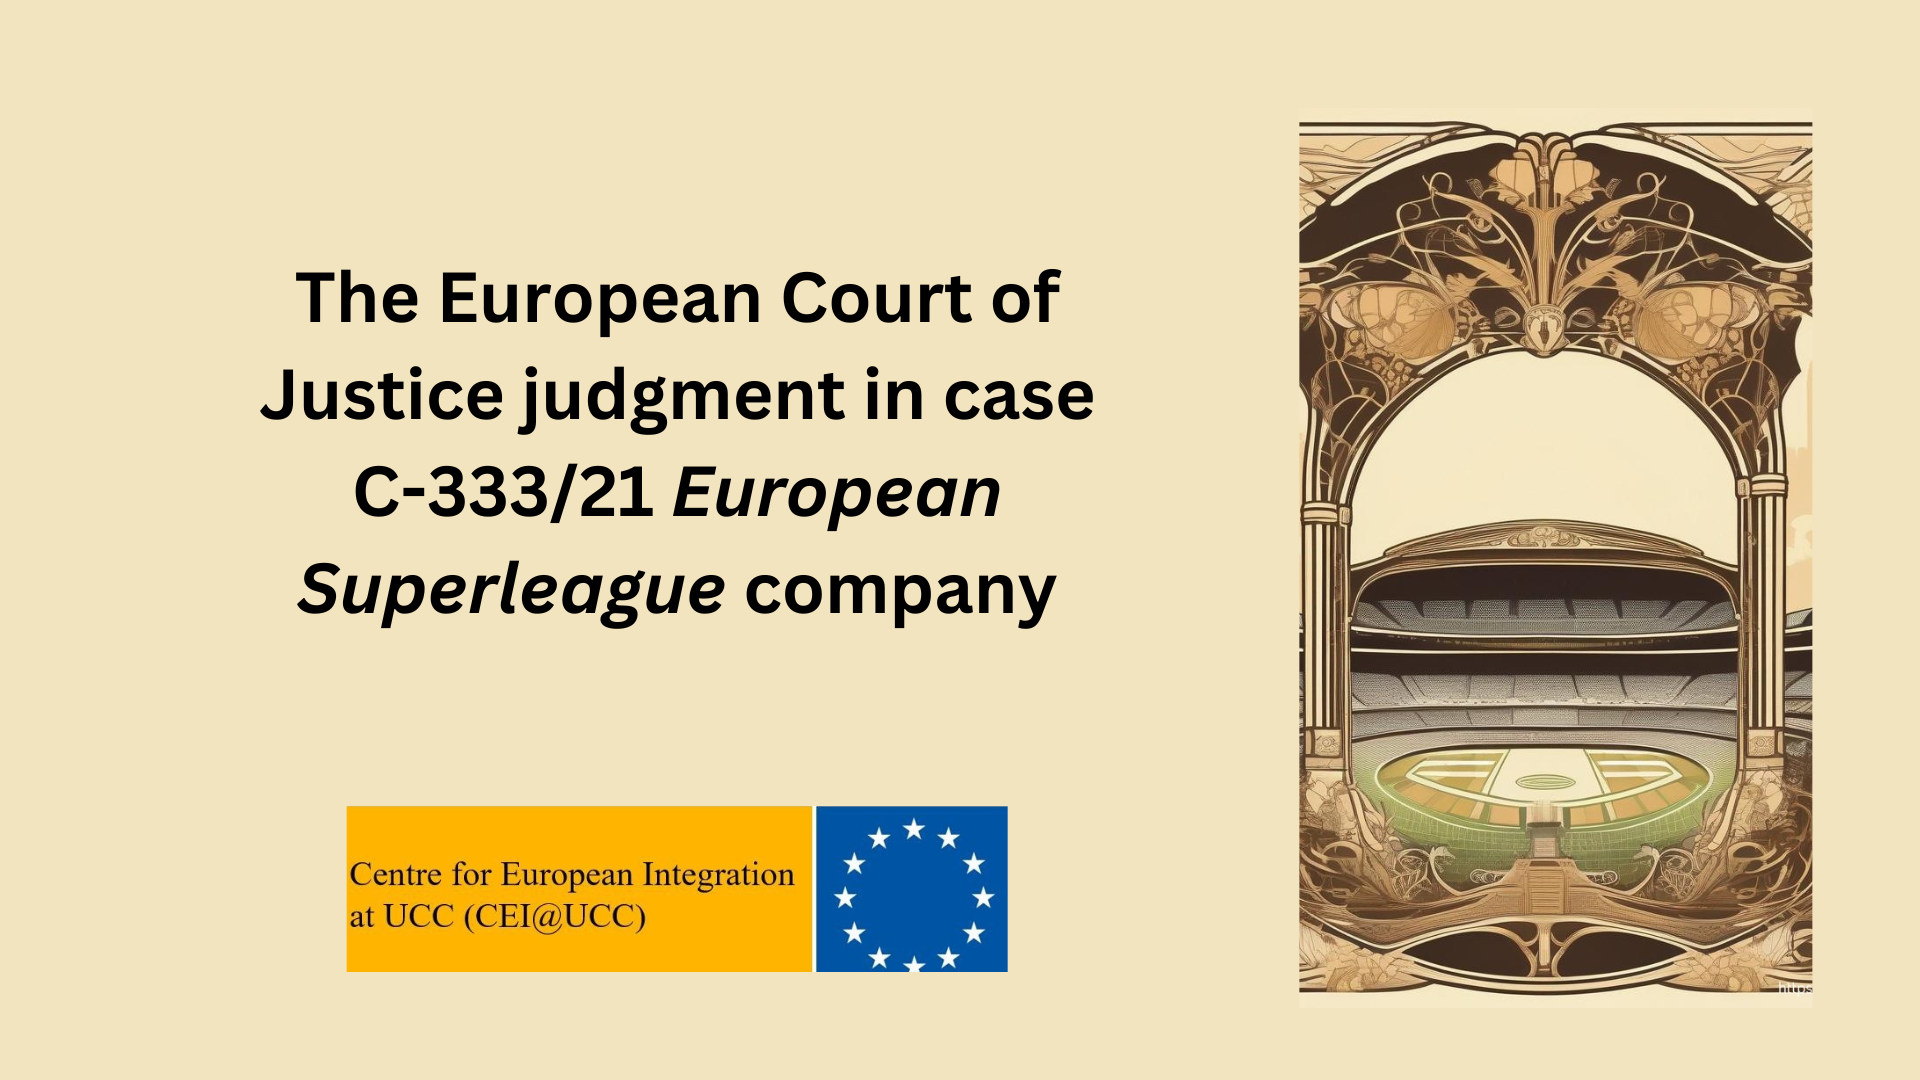 The European Court of Justice judgment in case C-333/21 European Superleague company